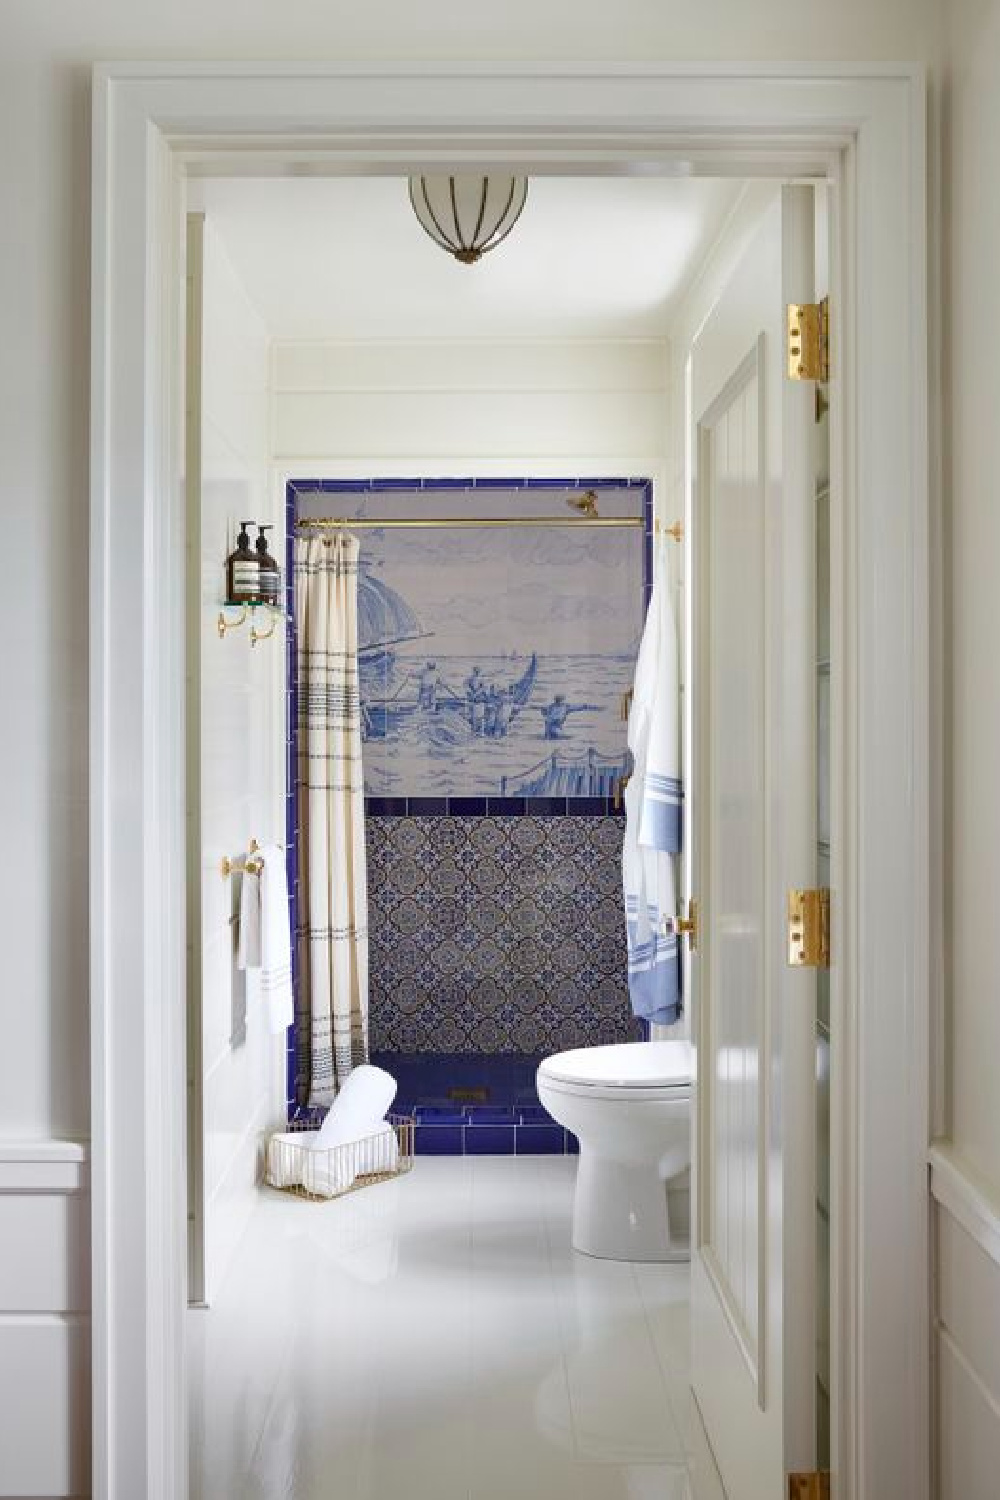 Greydon House bathroom with cobalt blue shower tile. COME TOUR MORE Nantucket Style Chic & Summer Vibes! #nantucket #interiordesign #designinspiration #summerliving #coastalstyle